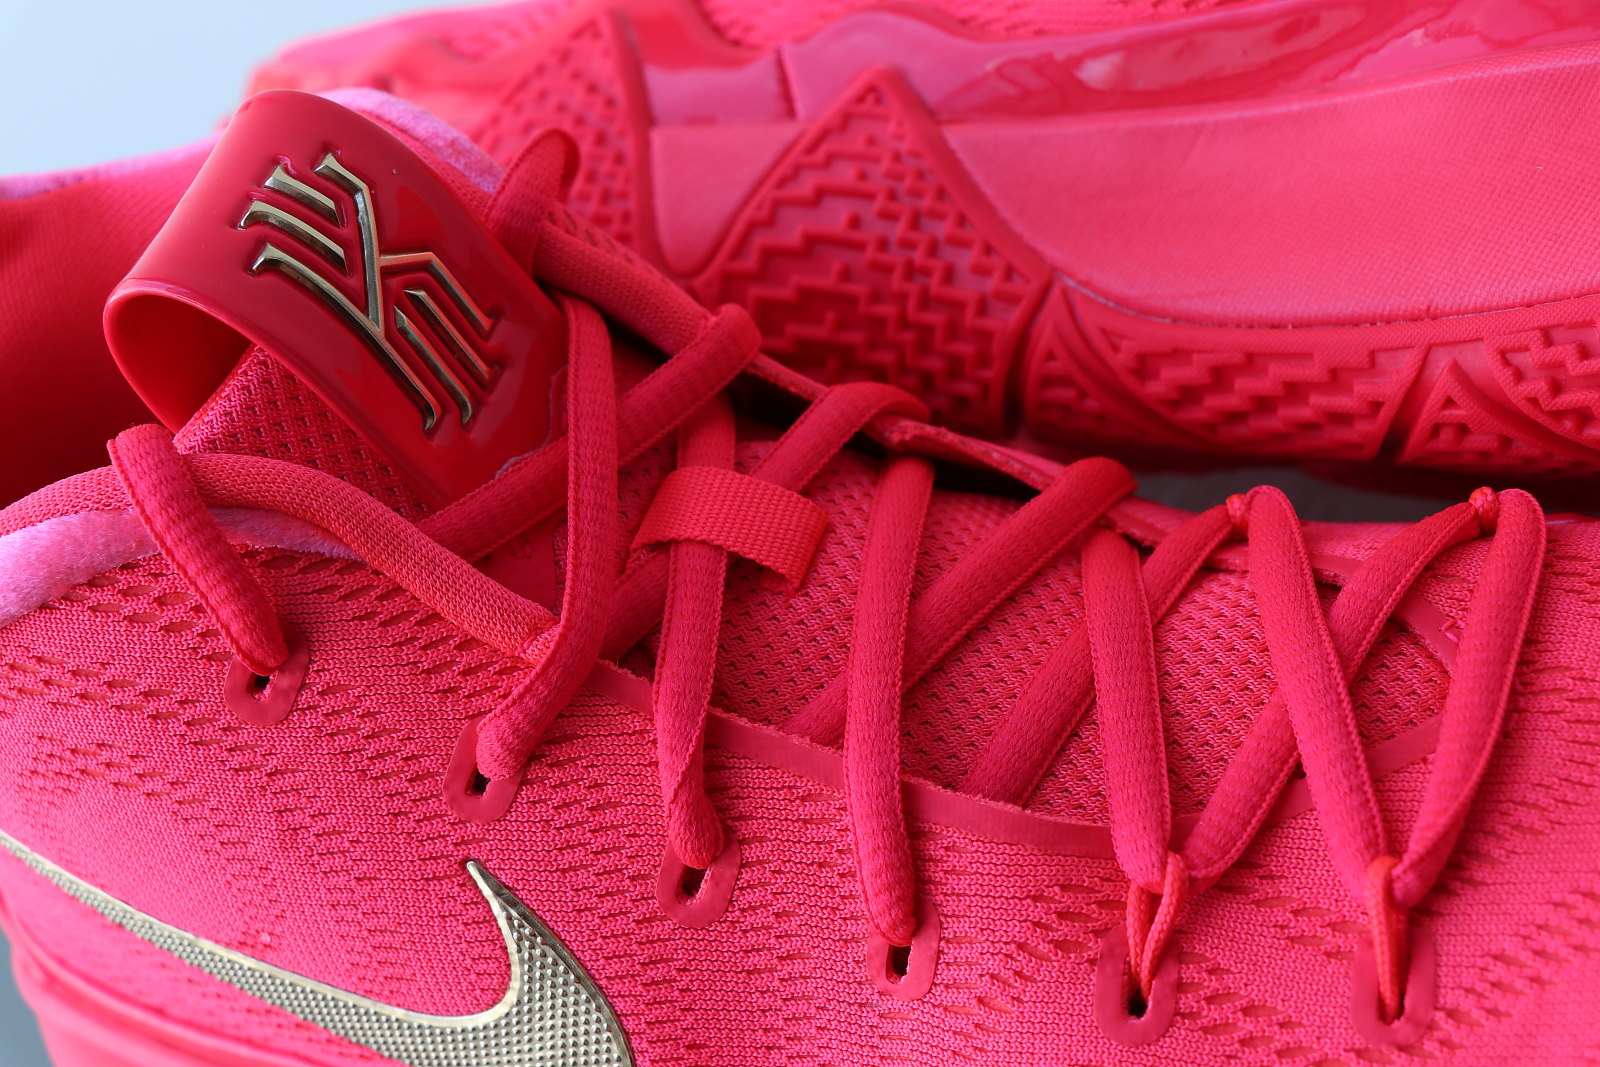 Nike Kyrie 4 Red Carpet